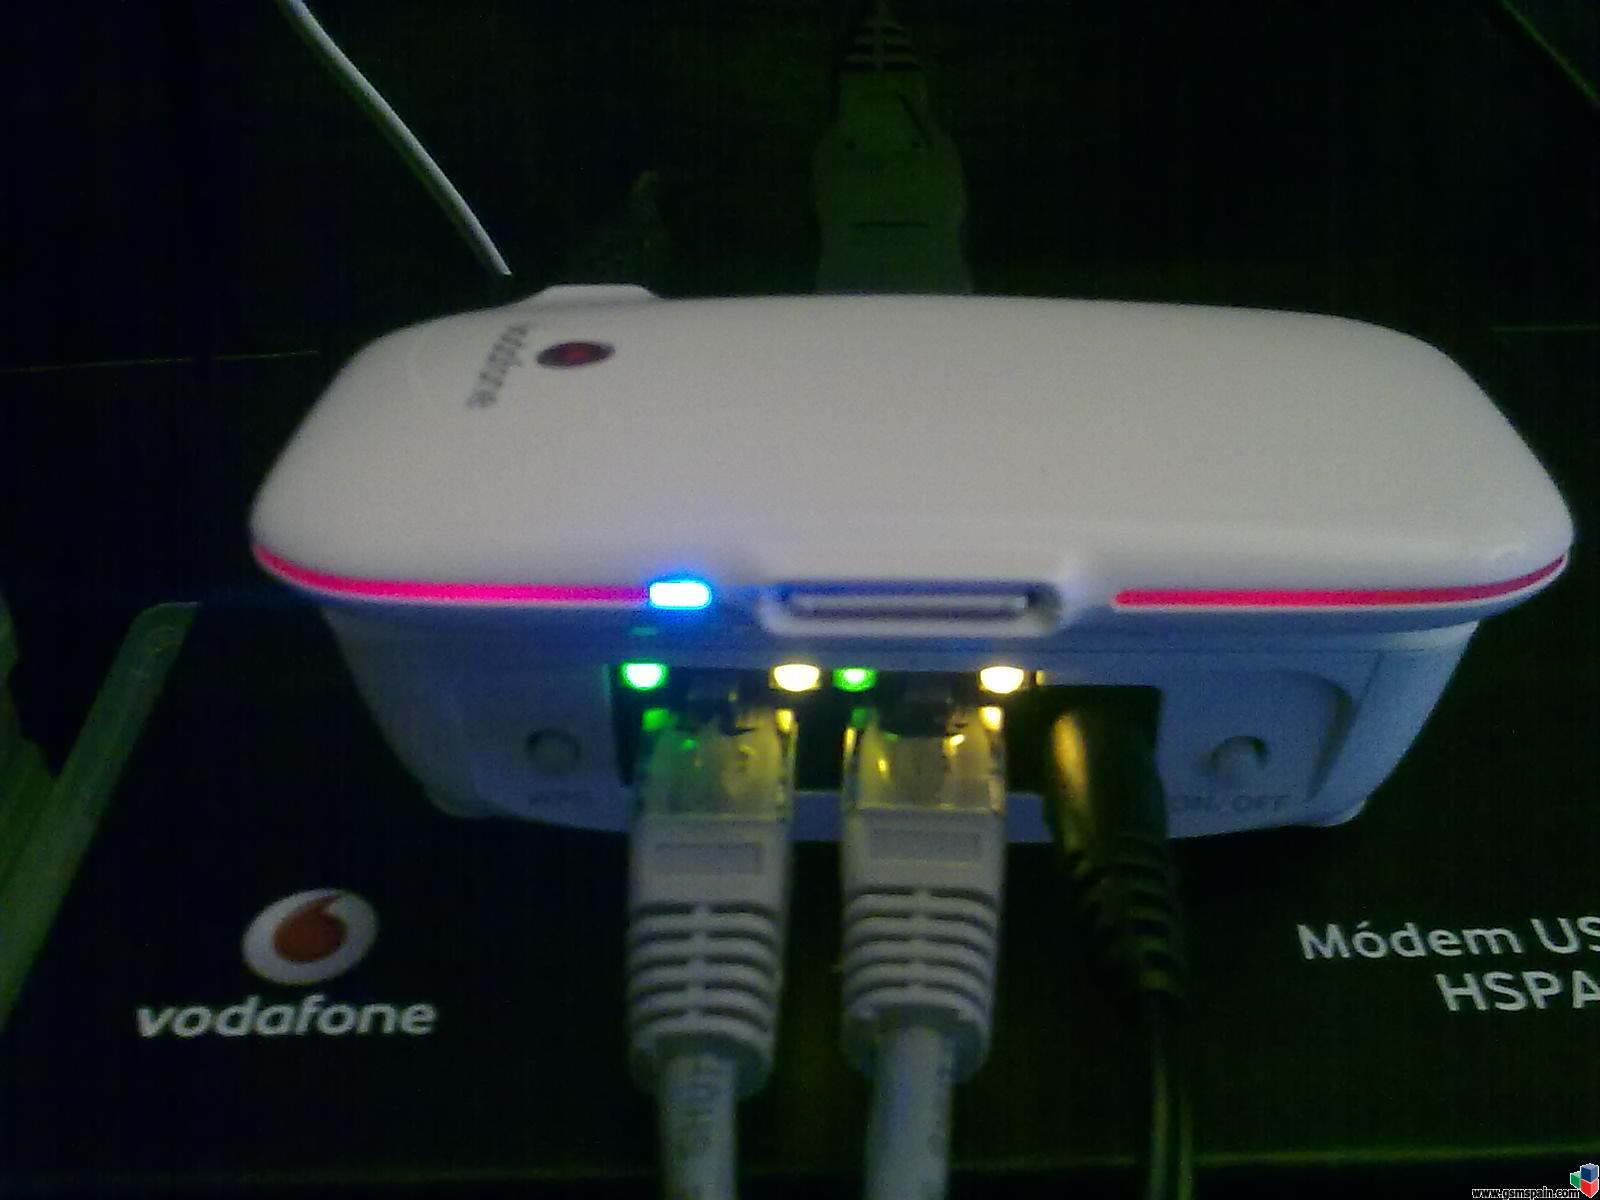 Review y test de la base wifi + modem k3765